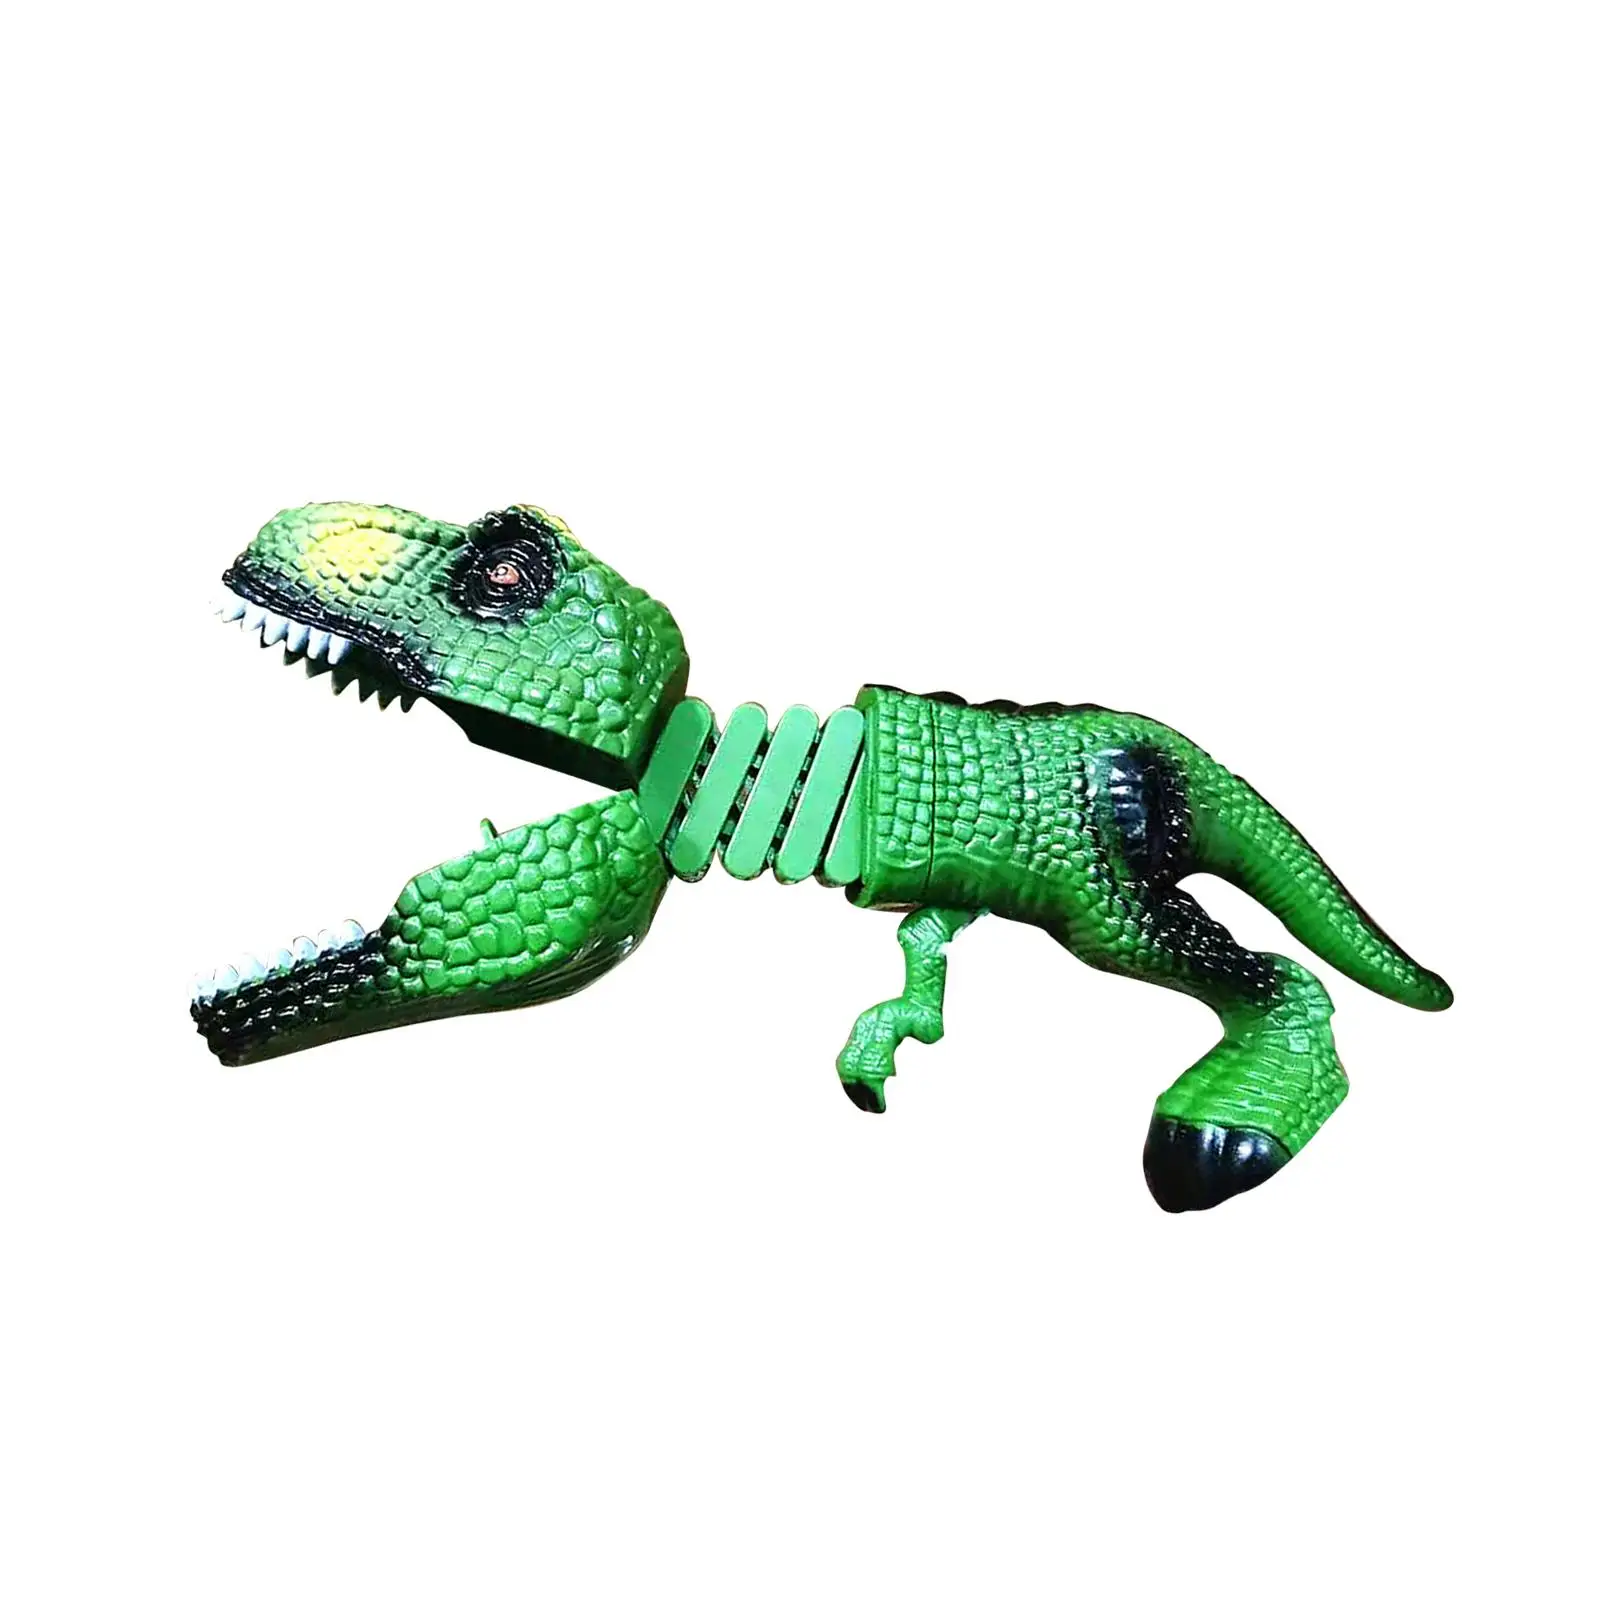 Dinosaur Animal Figures Early Learning Toy Reacher for Kids Boys Girls Gift